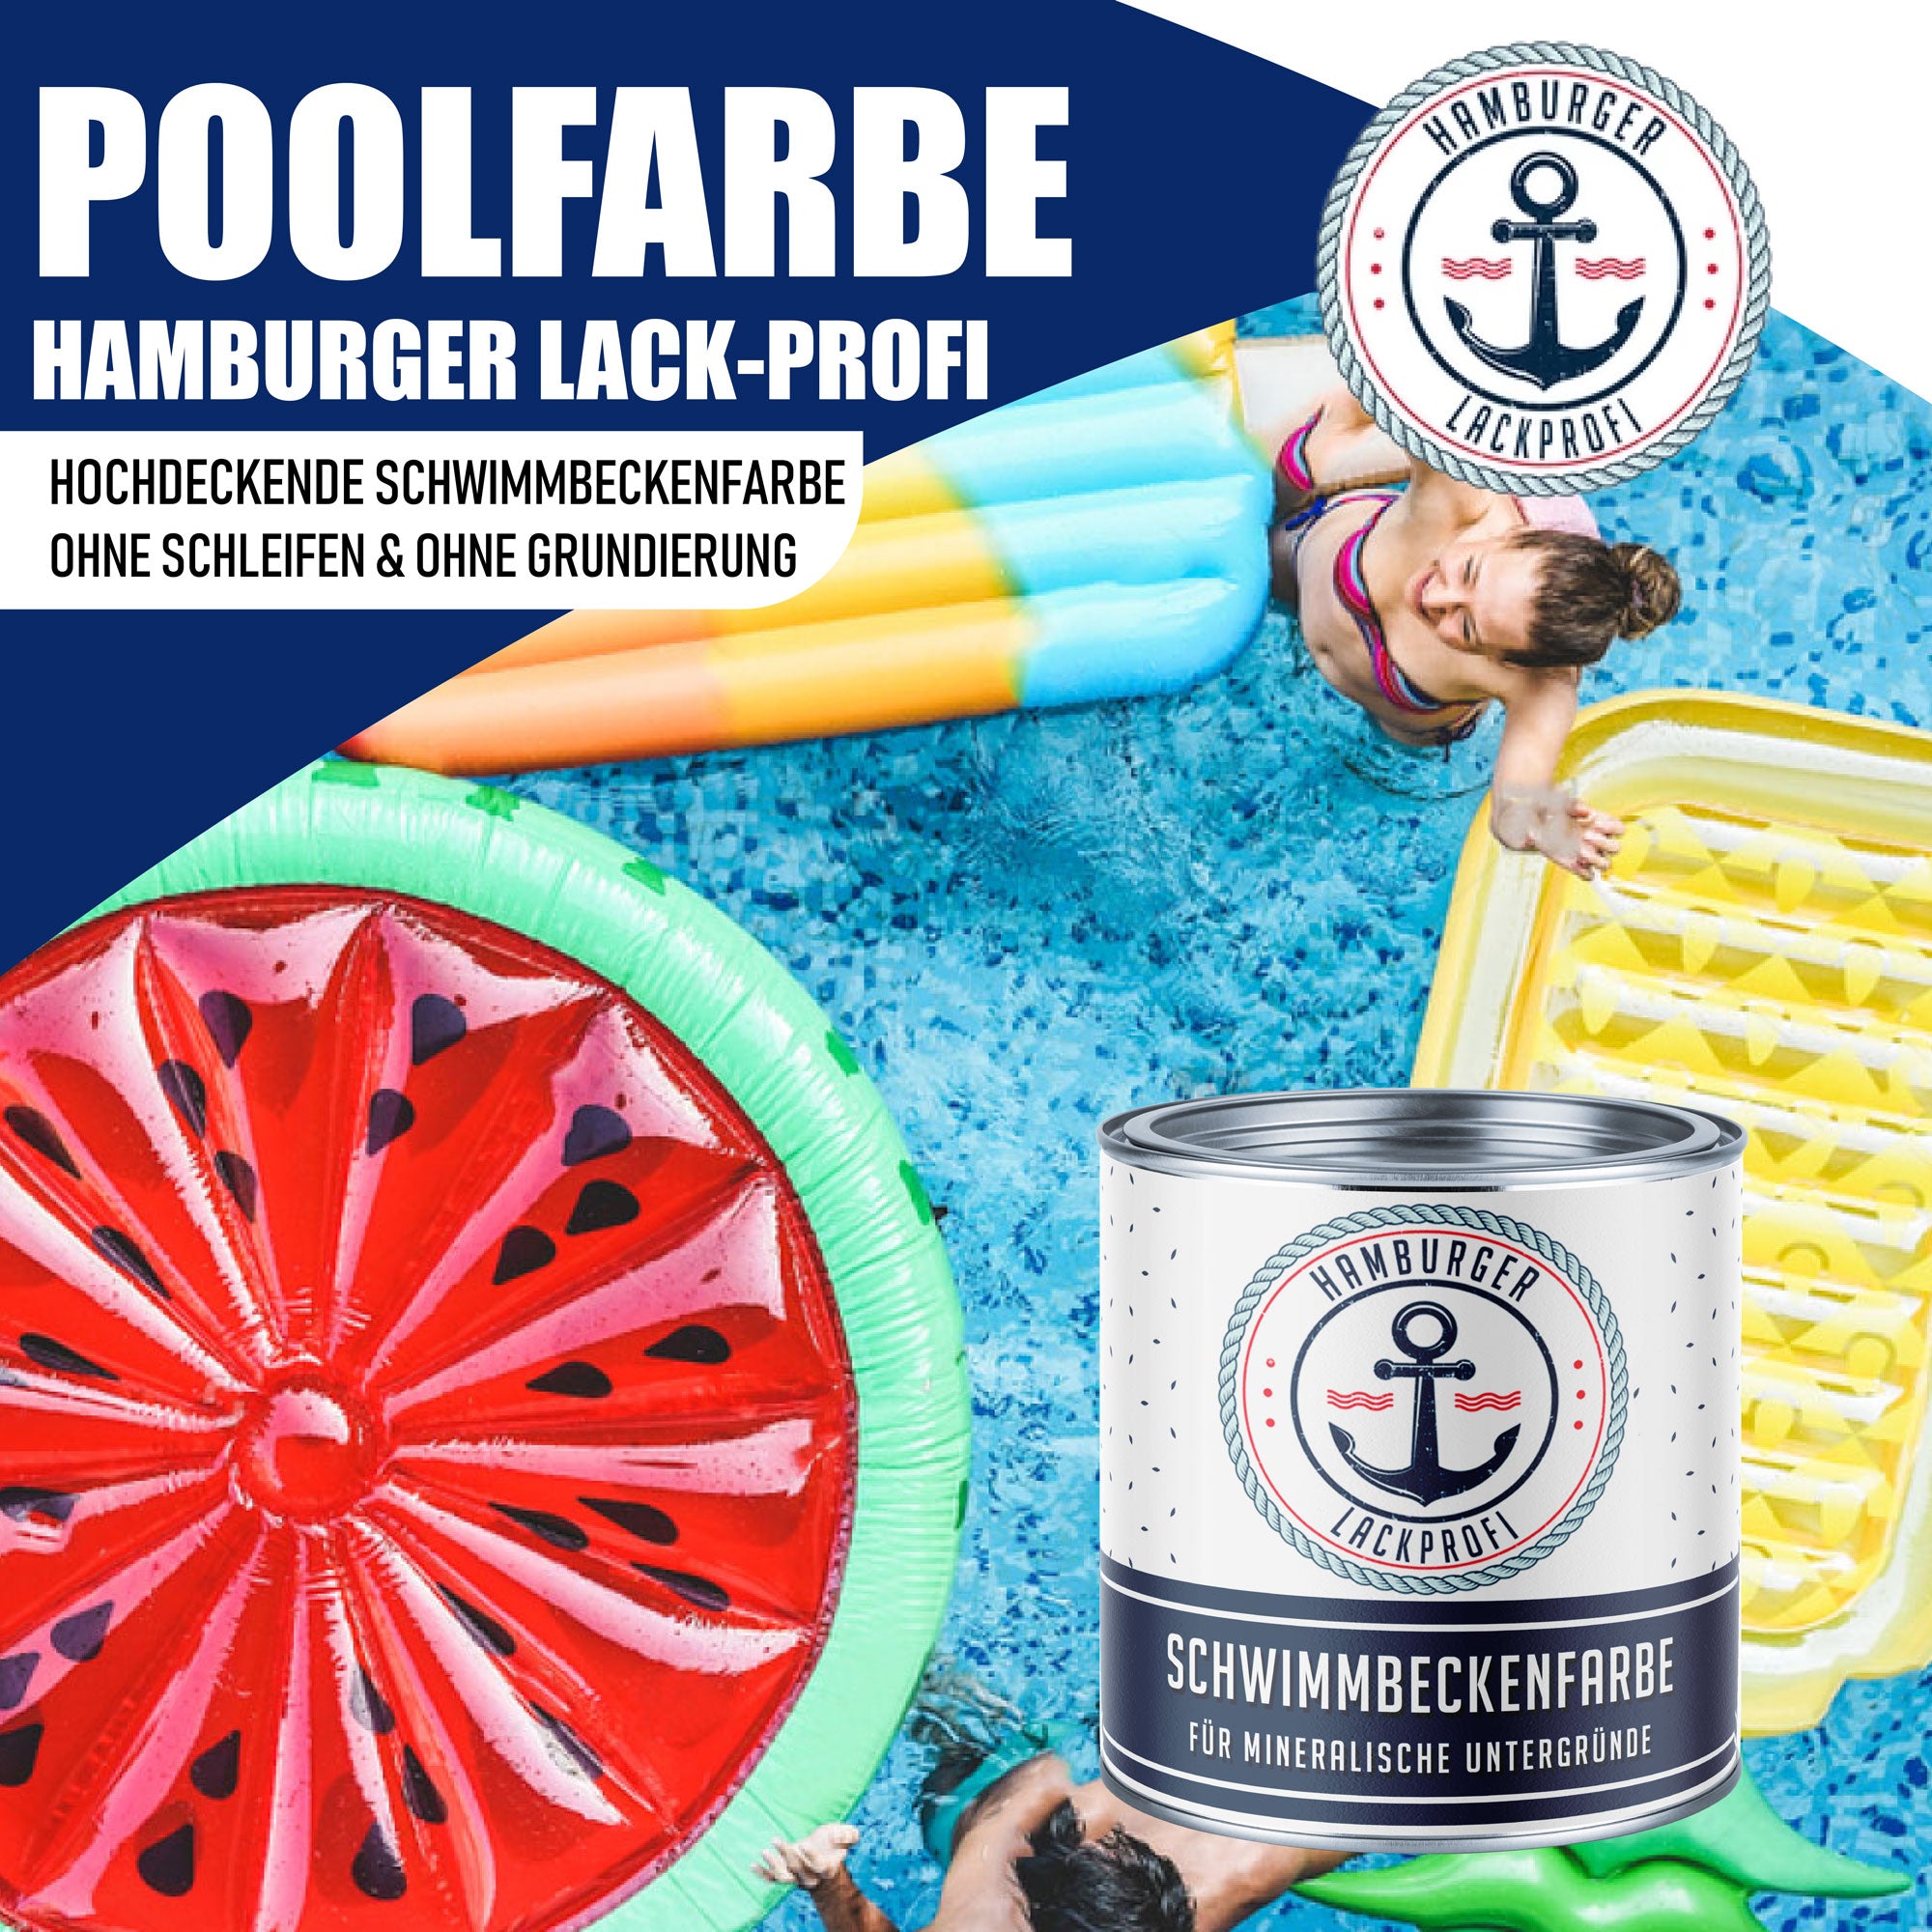 Hamburger Lack-Profi Schwimmbeckenfarbe Bordeauxviolett RAL 4004 - hochdeckende Poolfarbe